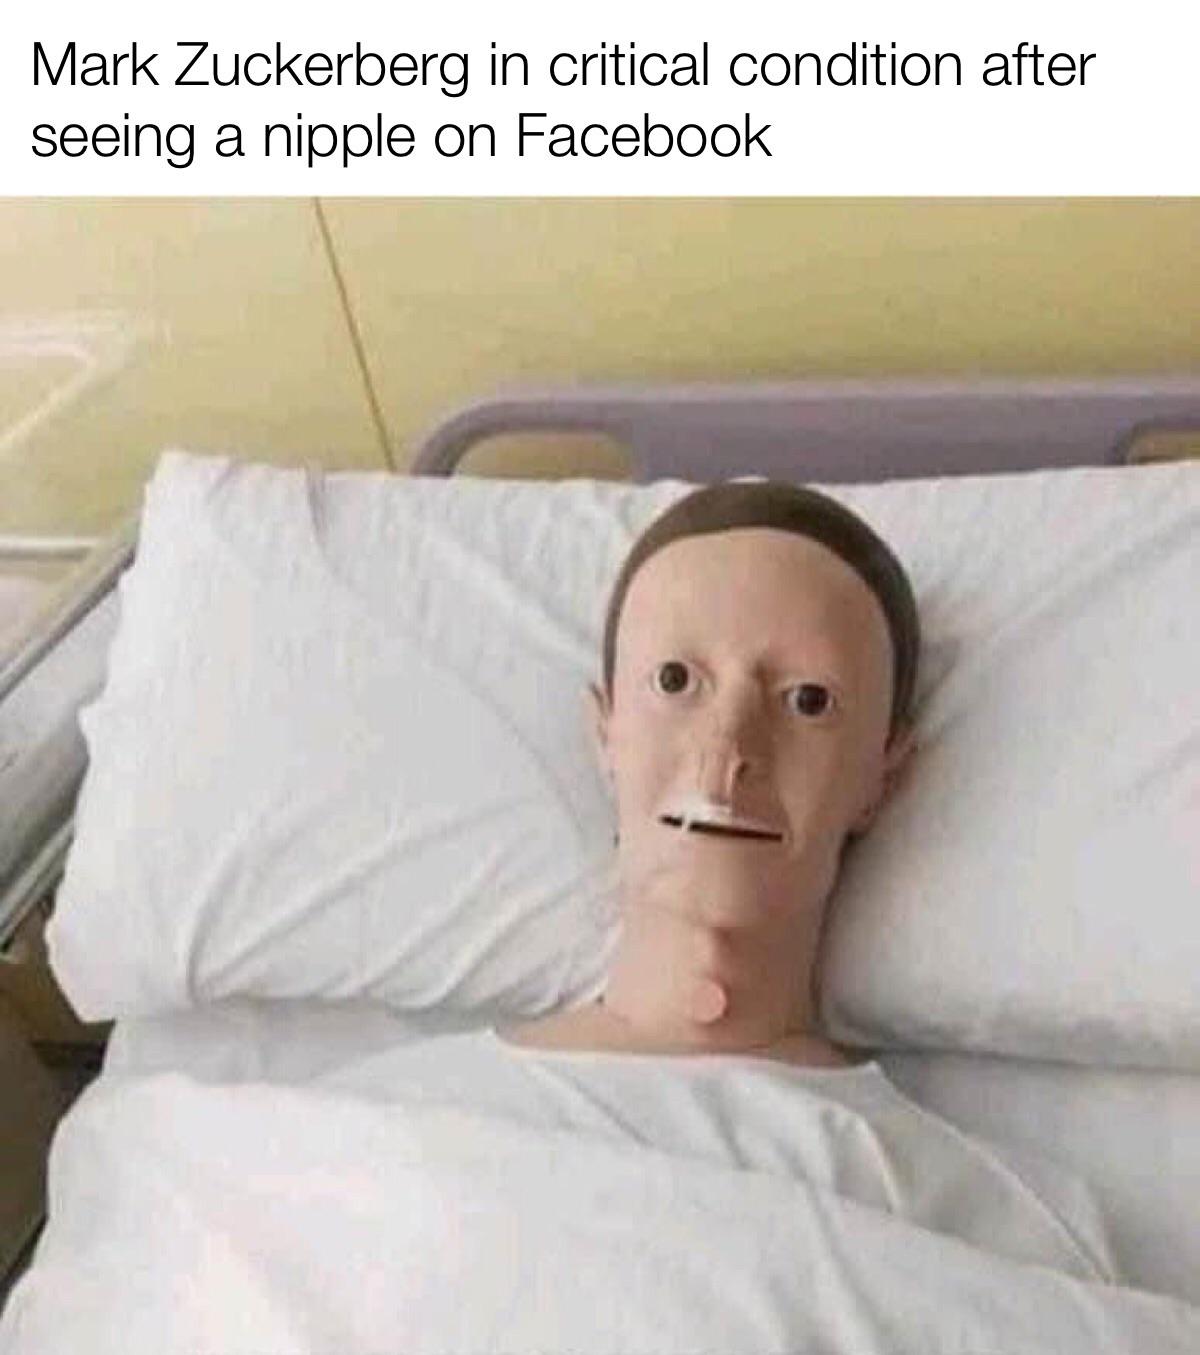 dank memes - get well soon mark zuckerberg - Mark Zuckerberg in critical condition after seeing a nipple on Facebook